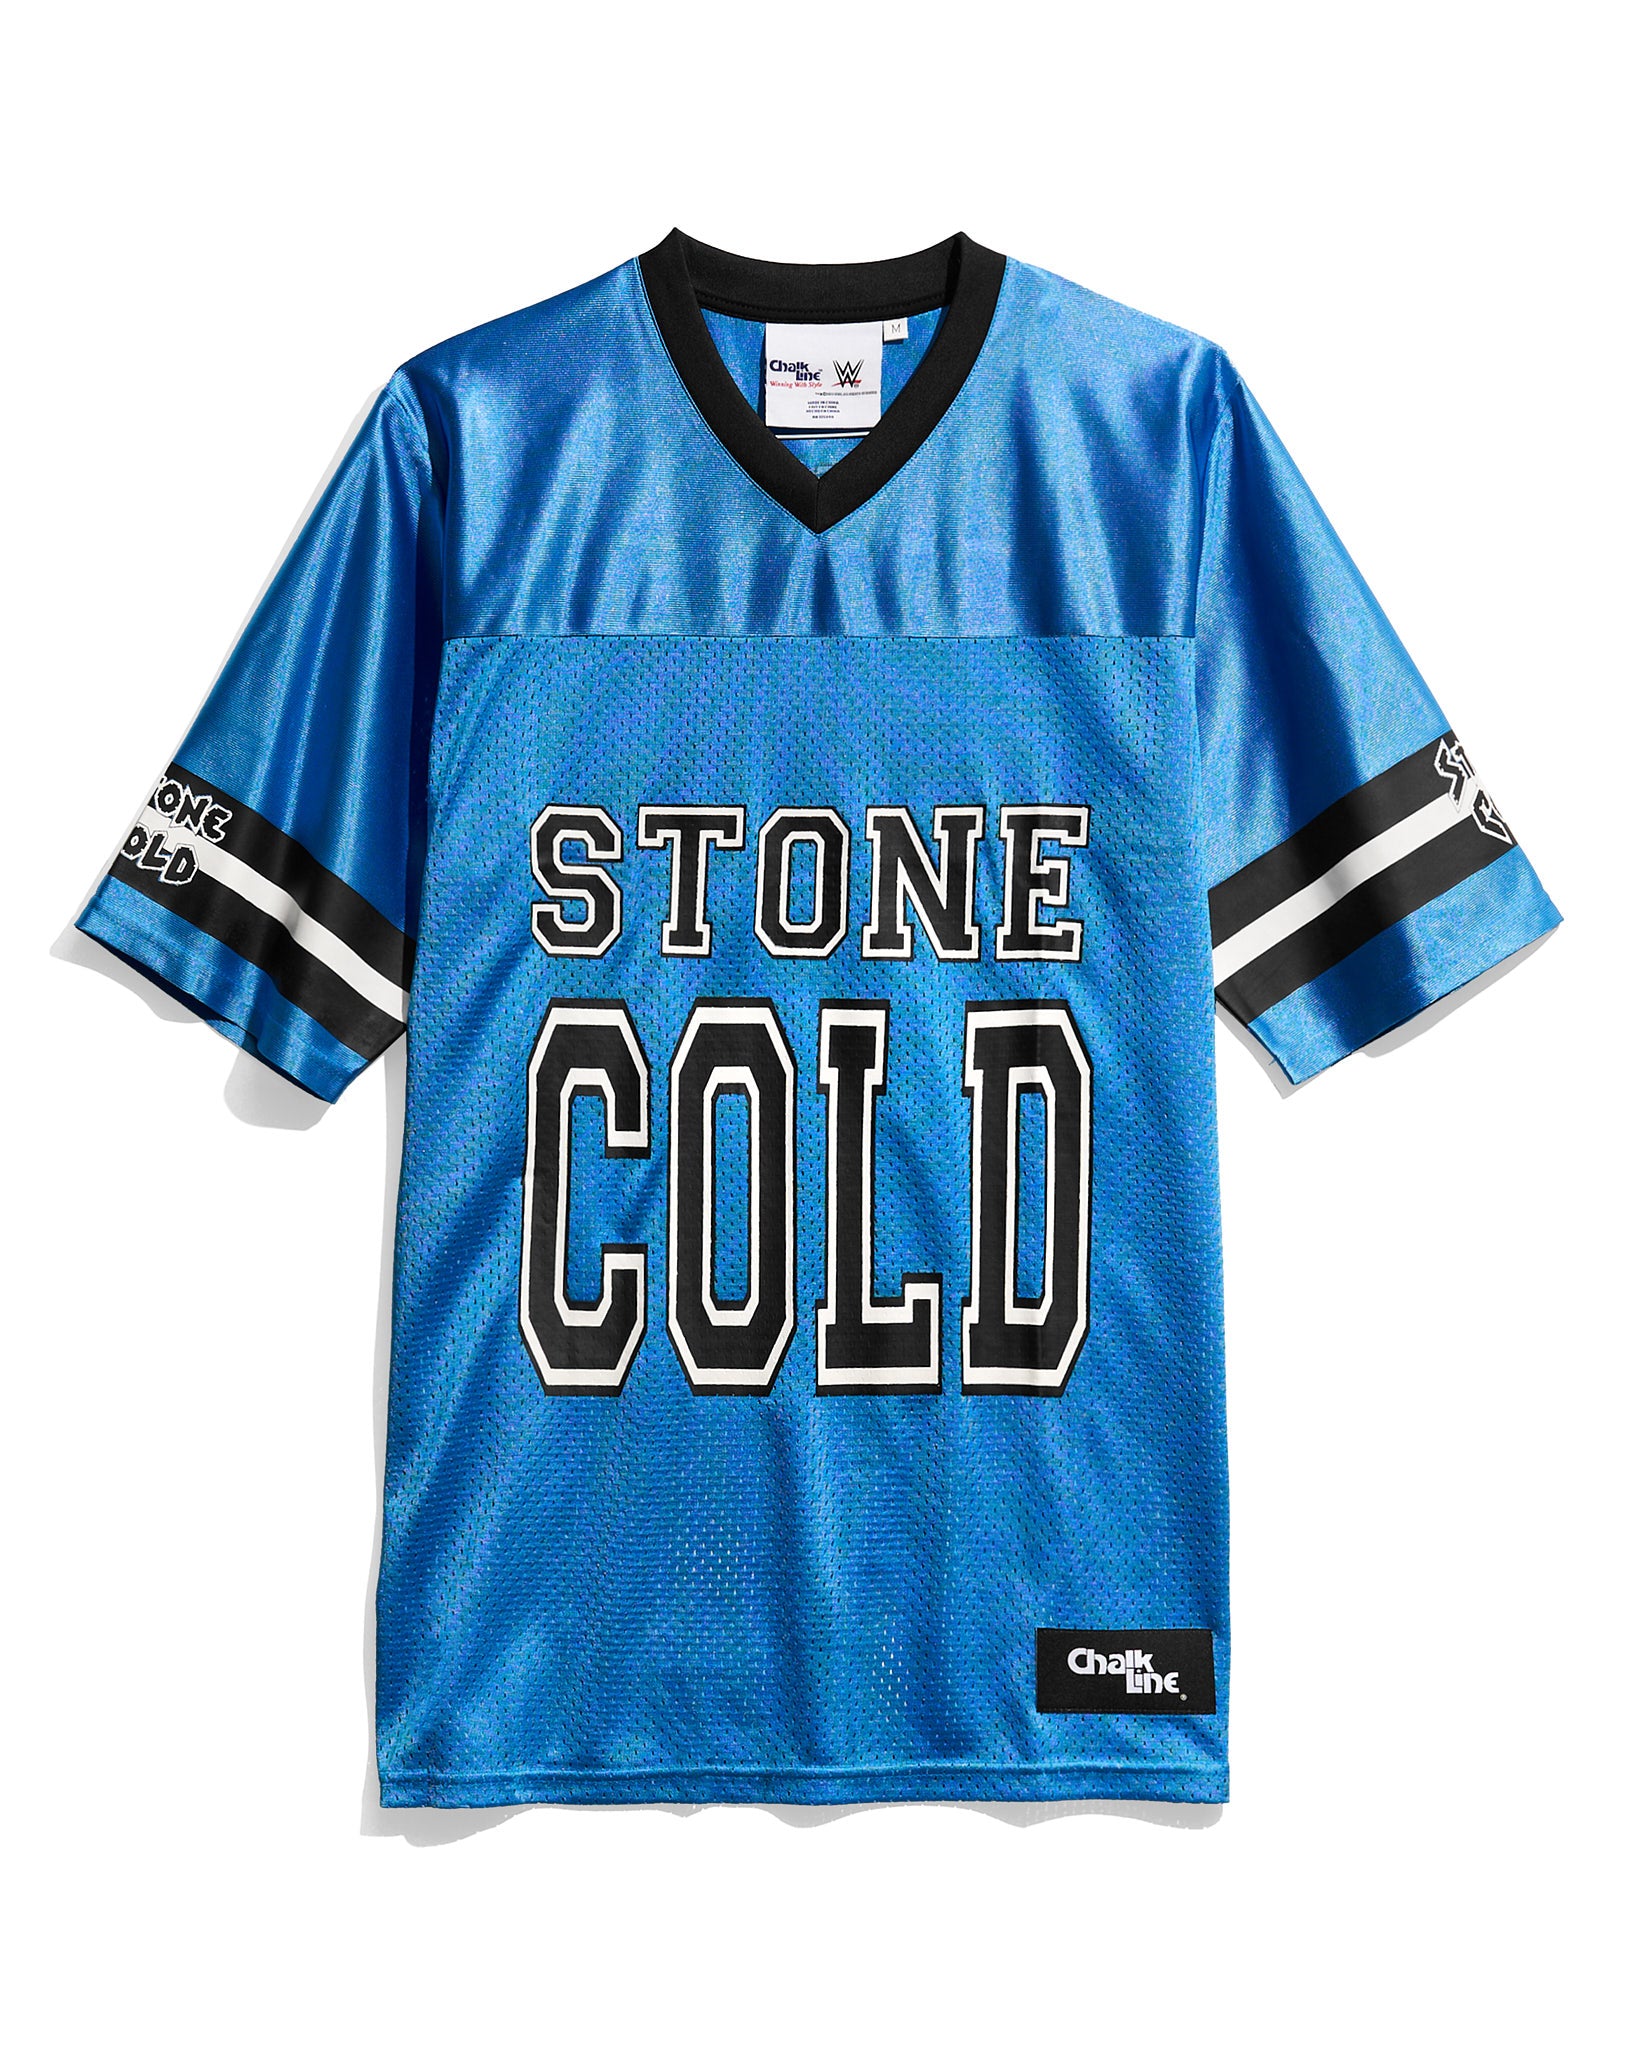 Stone Cold Steve Austin – Chalk Line Apparel